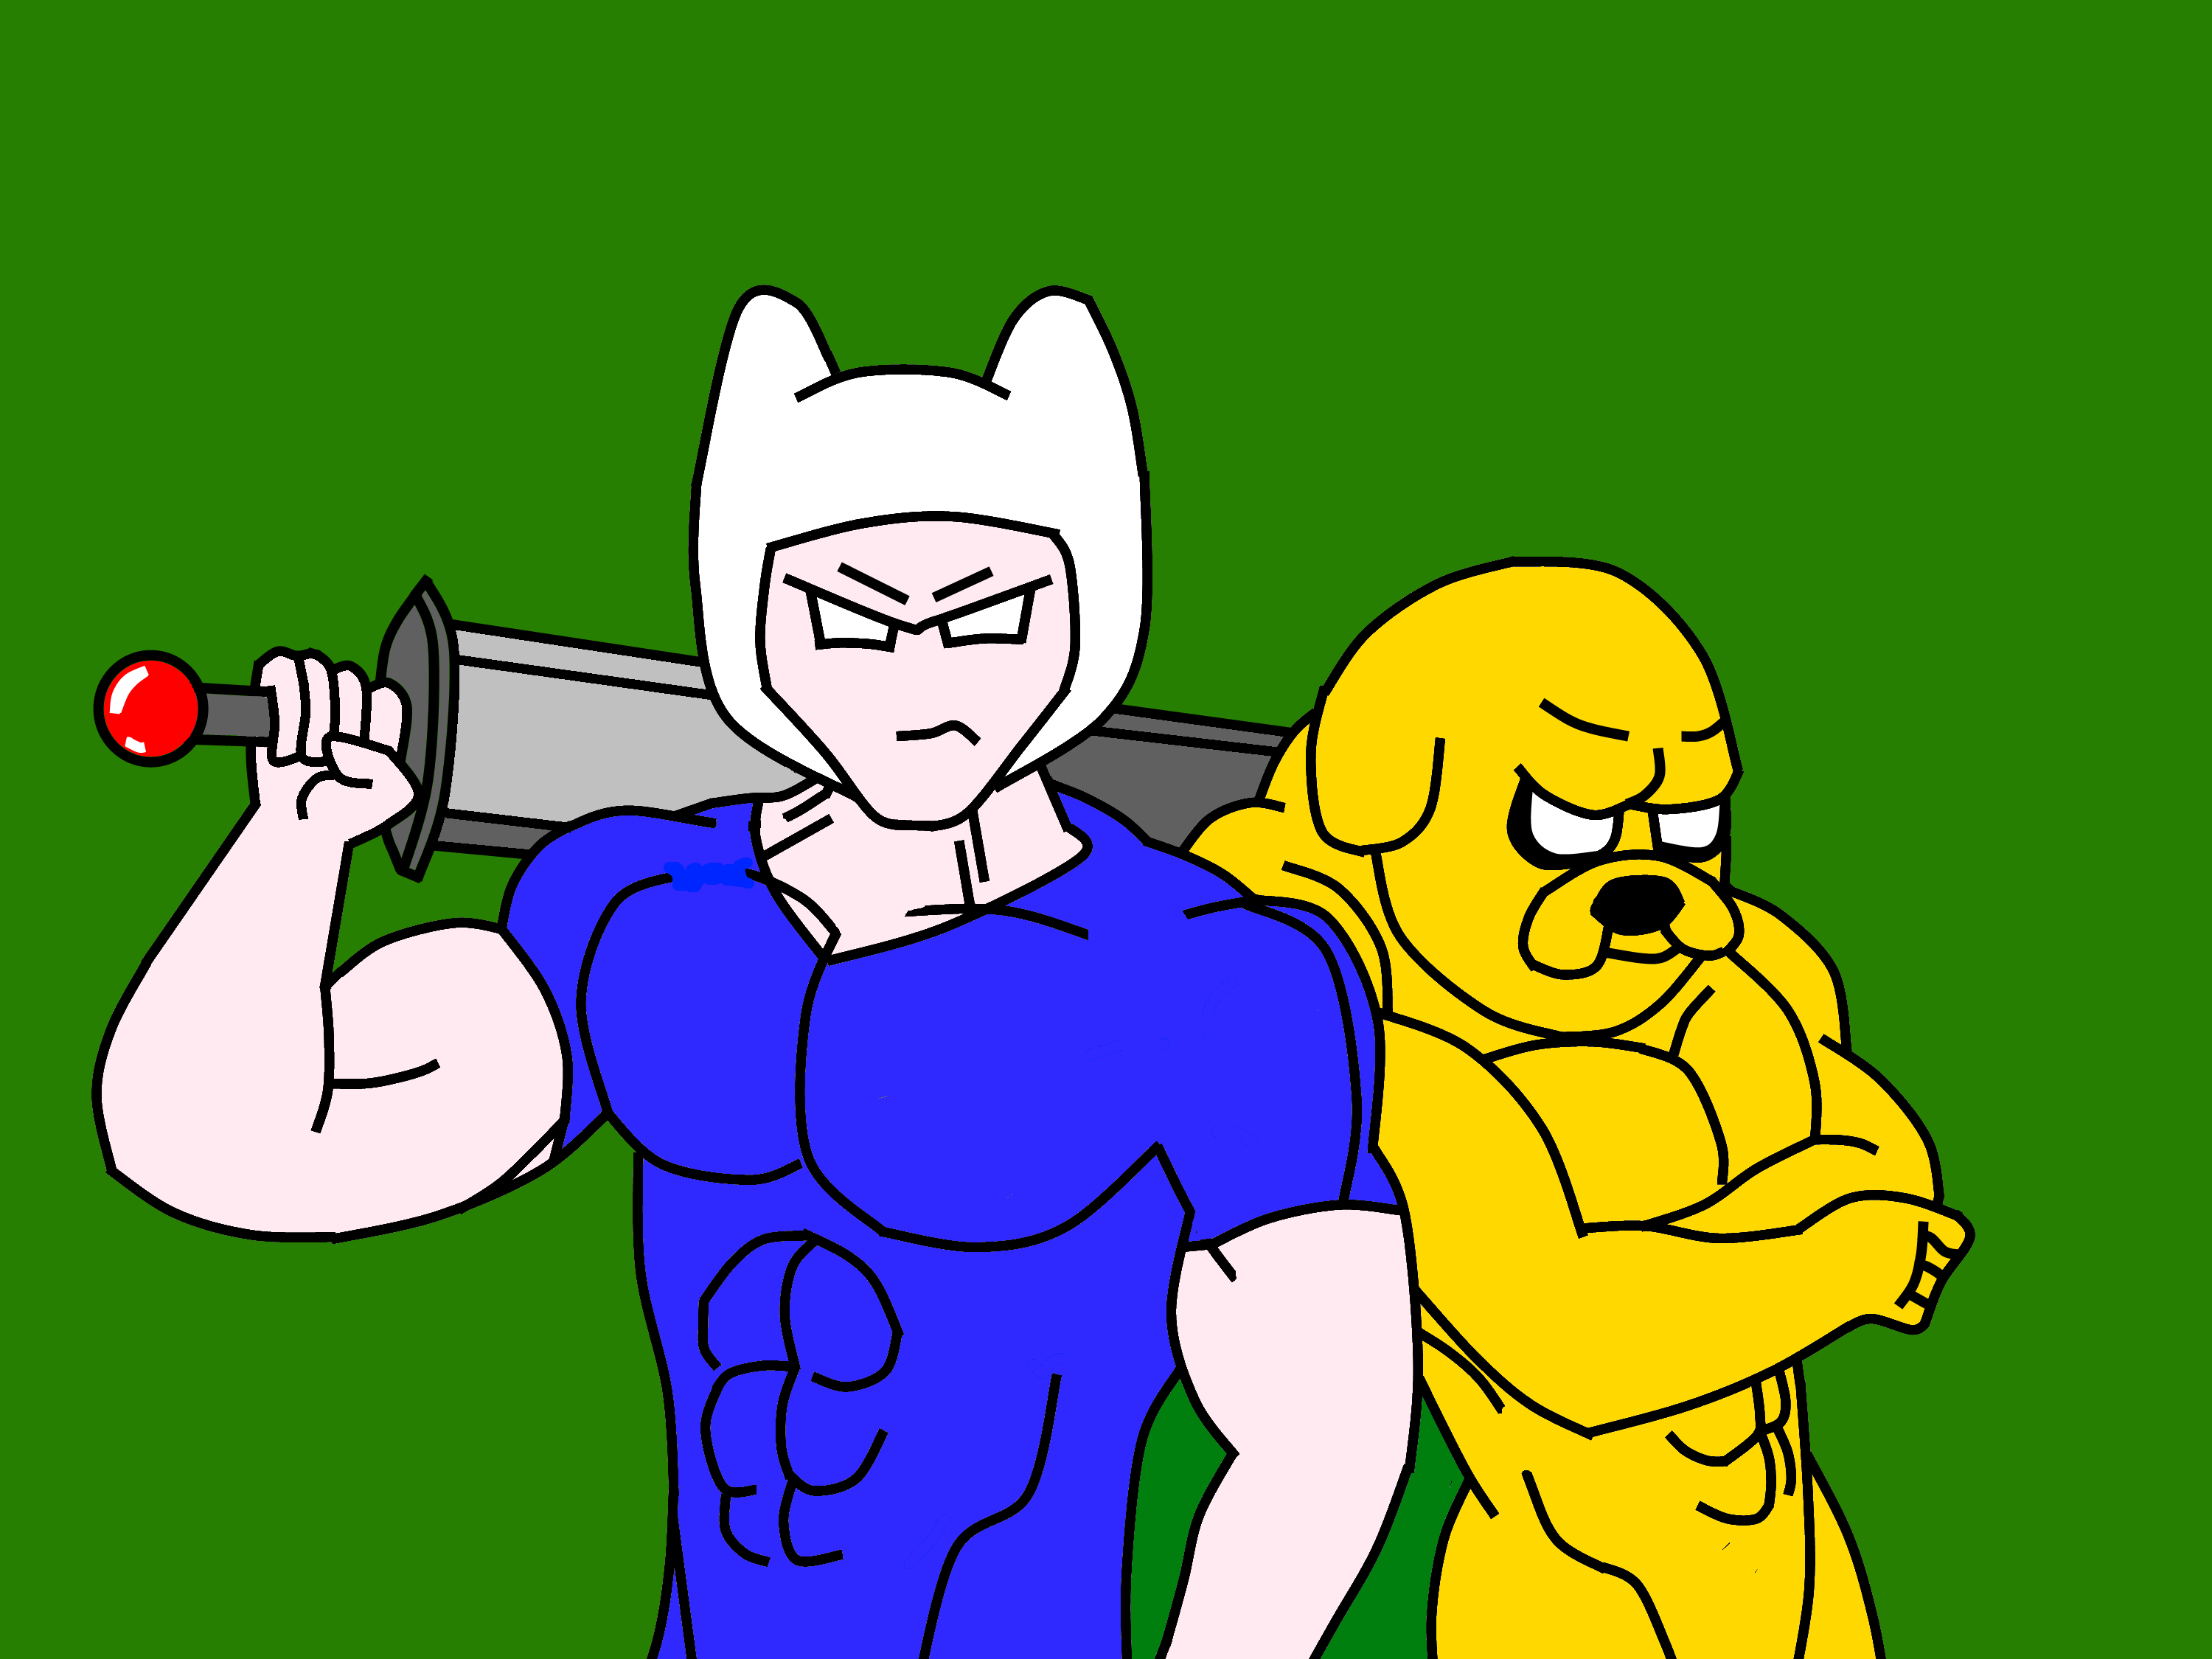 Epic Adventure Time by BossBooski on DeviantArt